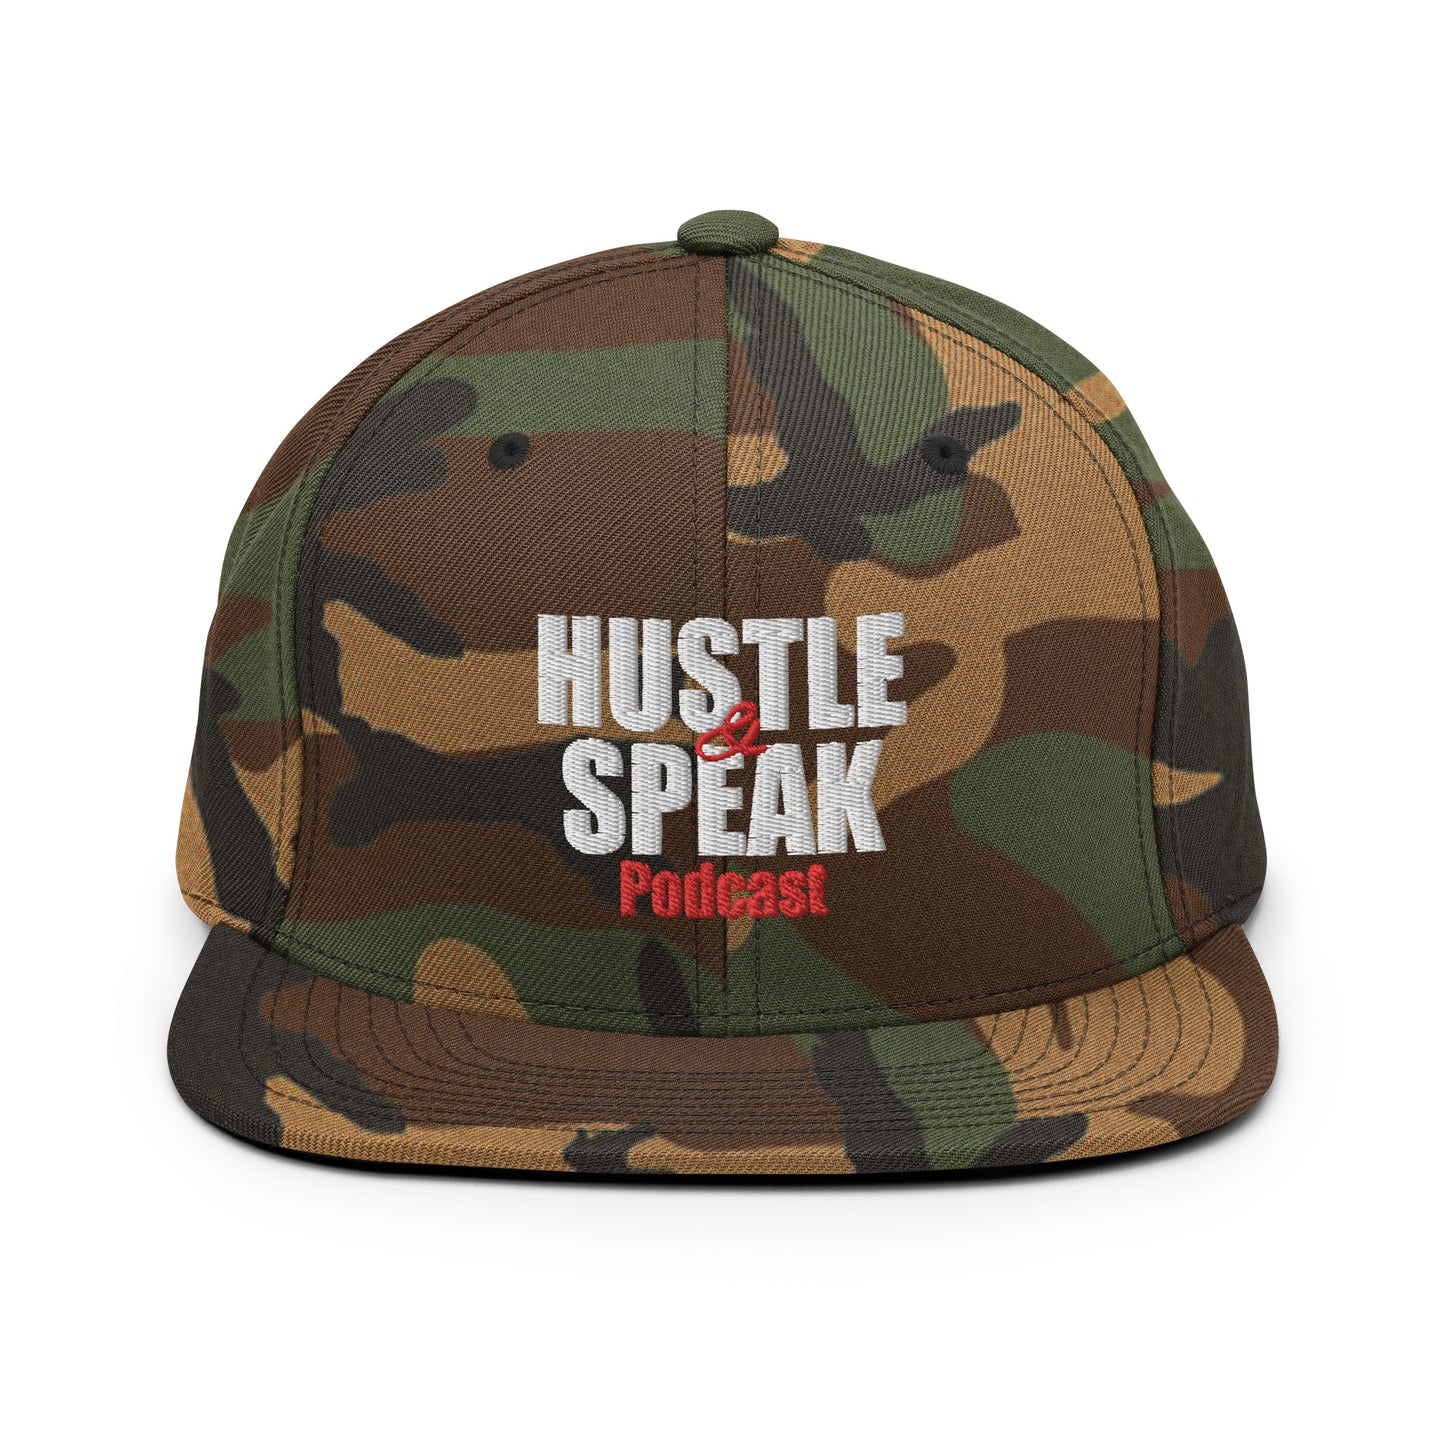 Hustle & Speak Podcast Snapback Hat